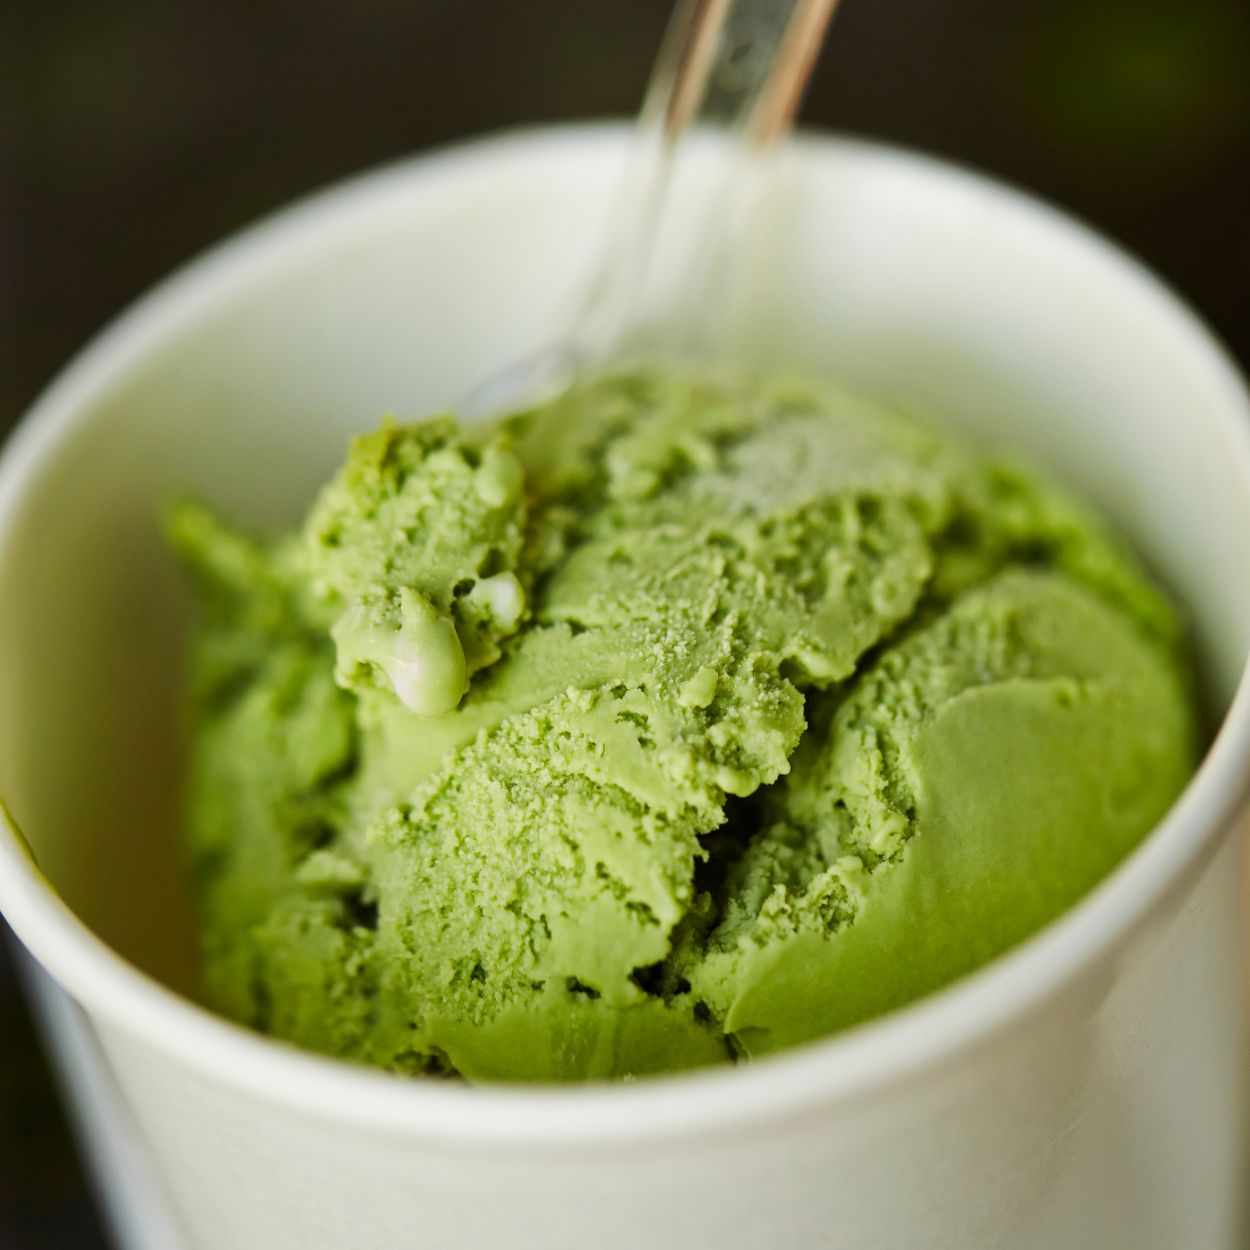 Pročitajte više o članku Recept za zeleni sladoled